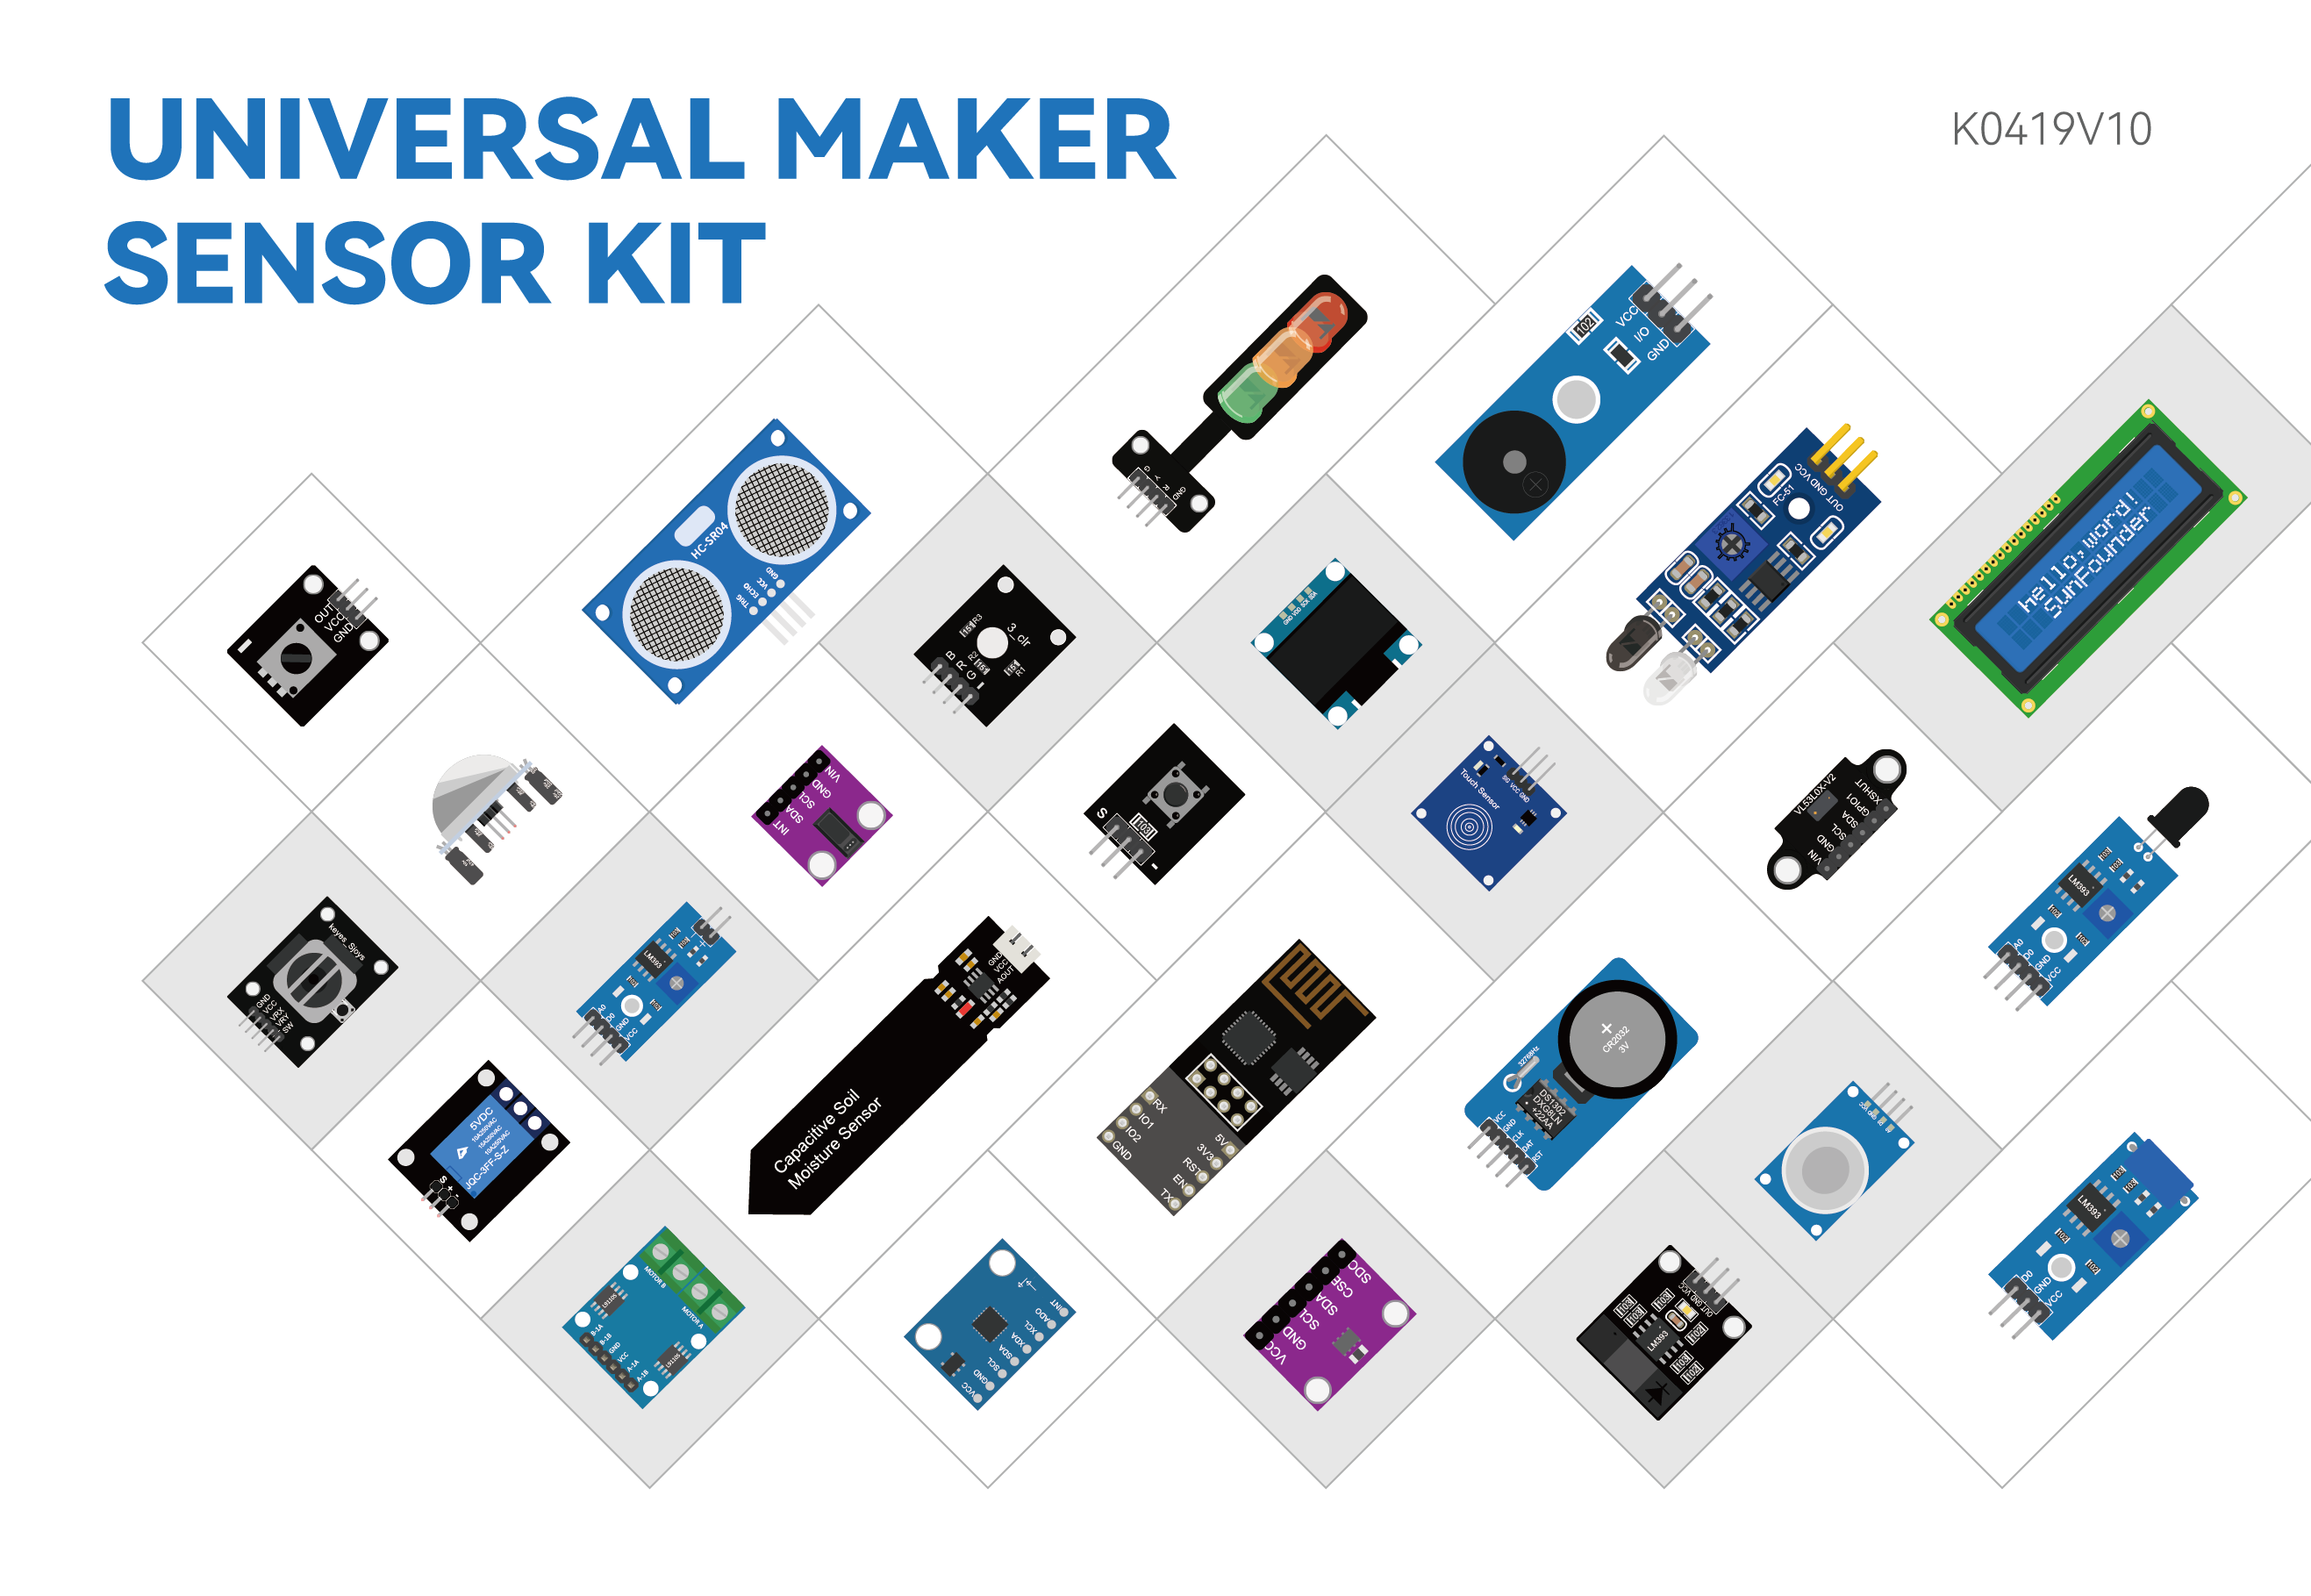 Universal Maker Sensor Kit